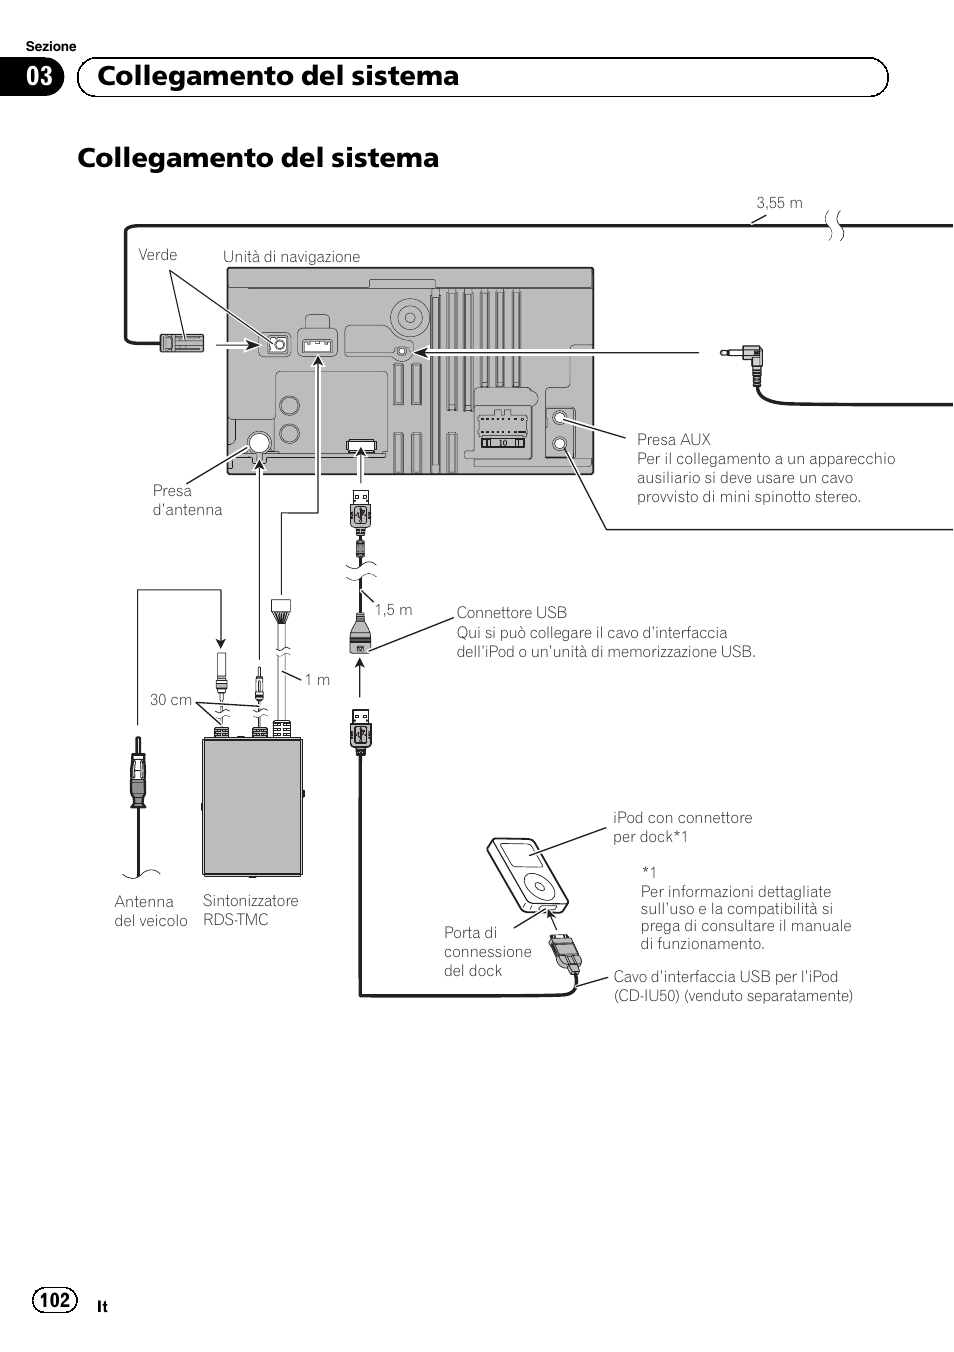 Collegamento del sistema, 03 collegamento del sistema | Pioneer AVIC-F320BT  User Manual | Page 102 / 144 | Original mode